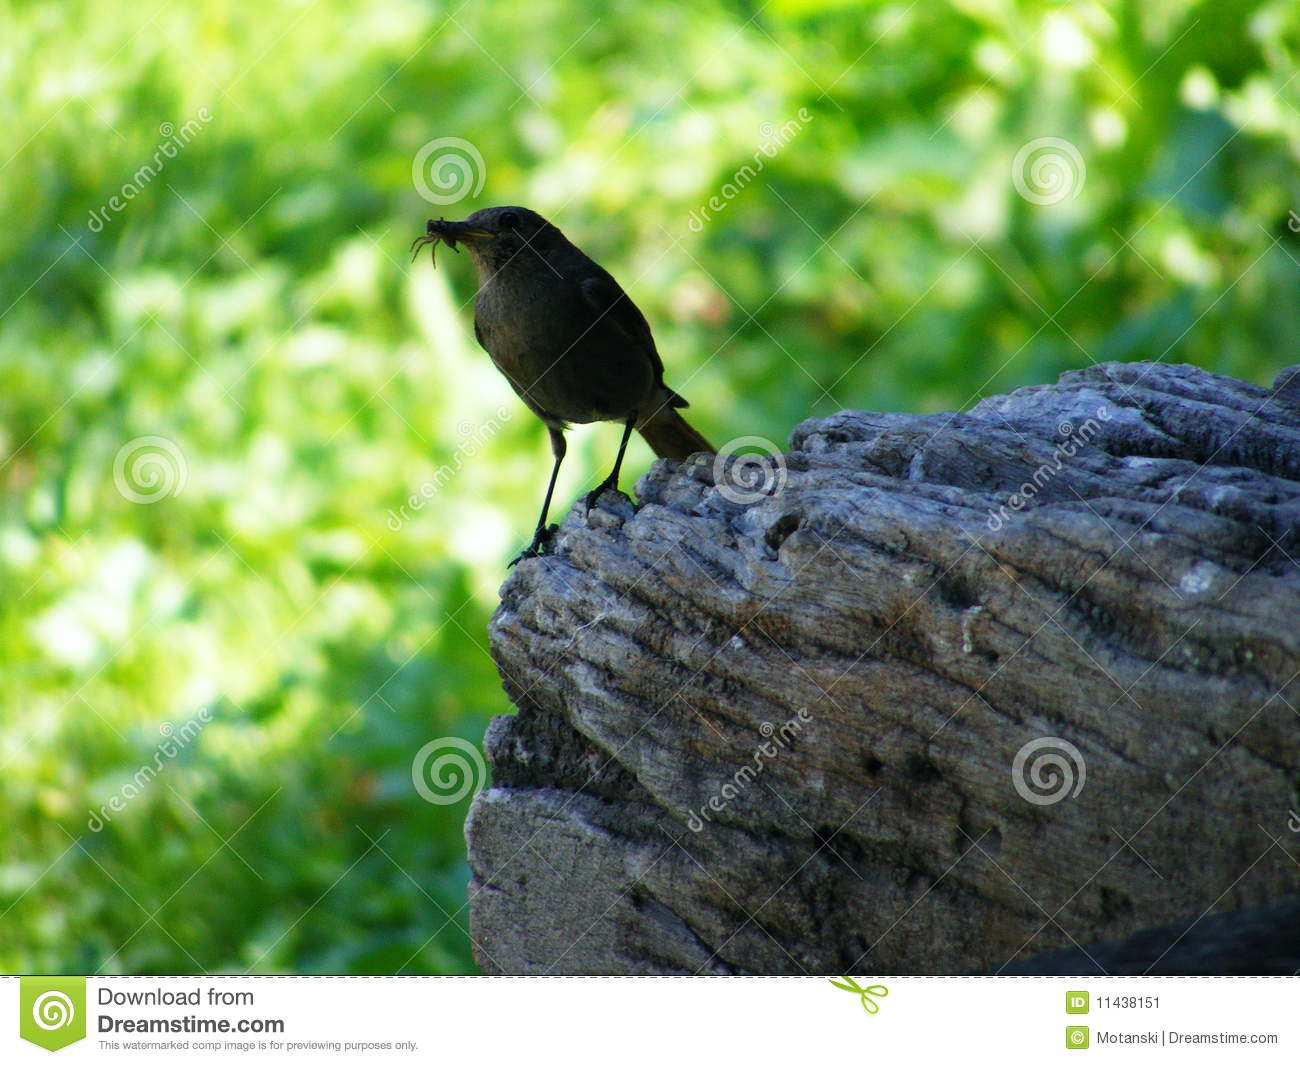 Bird S Meal Stock Image   Image  11438151